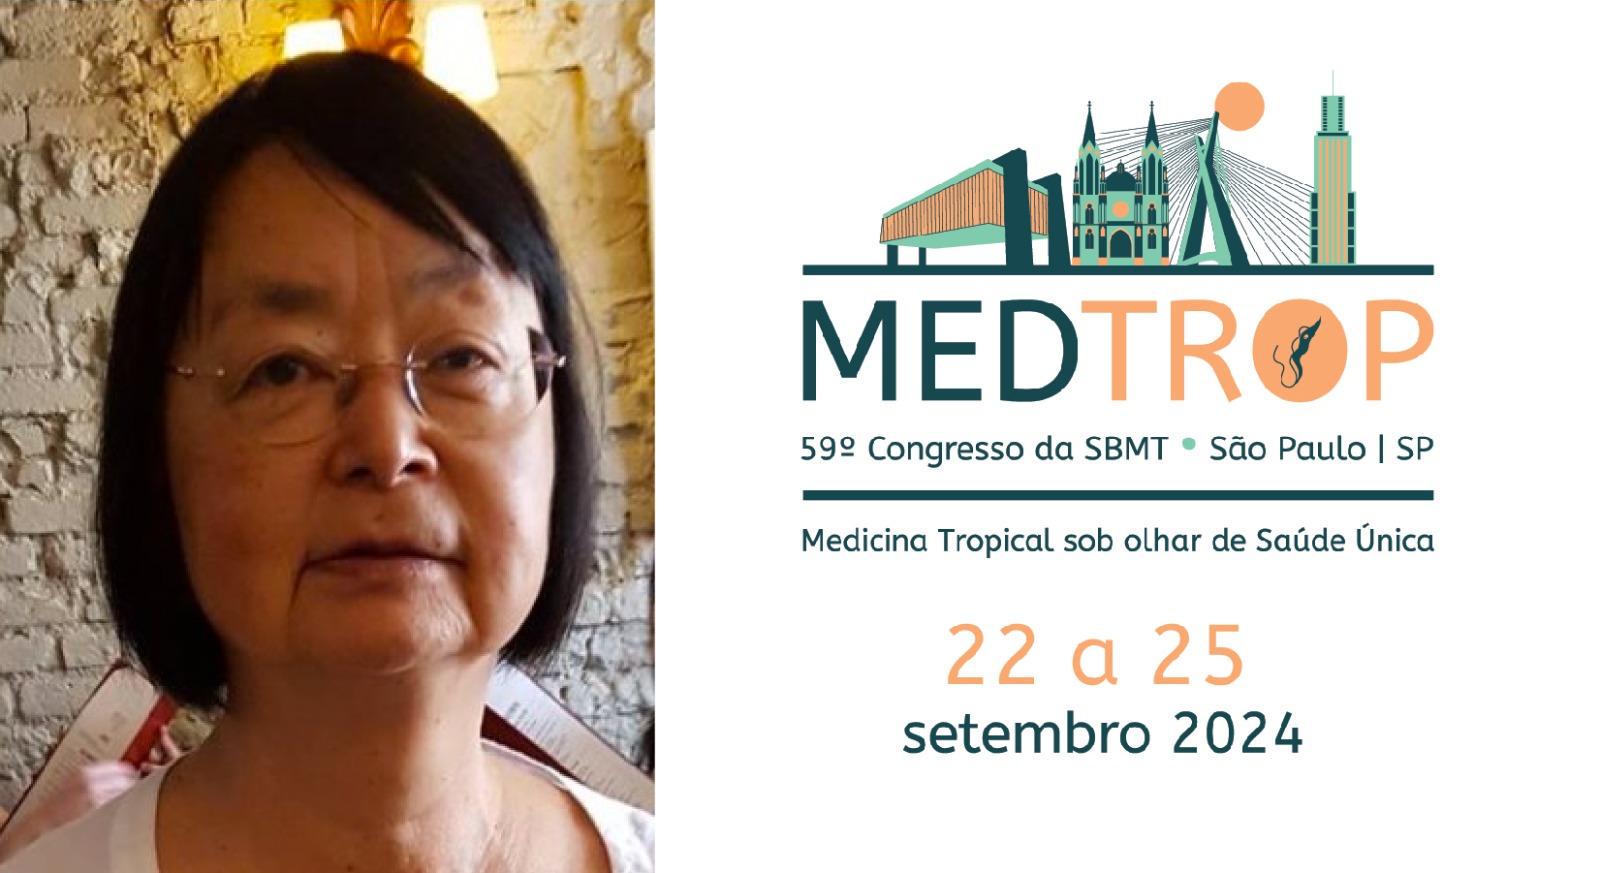 MEDTROP 2024: Medicina Tropical com perspectiva integrada de Saúde Única